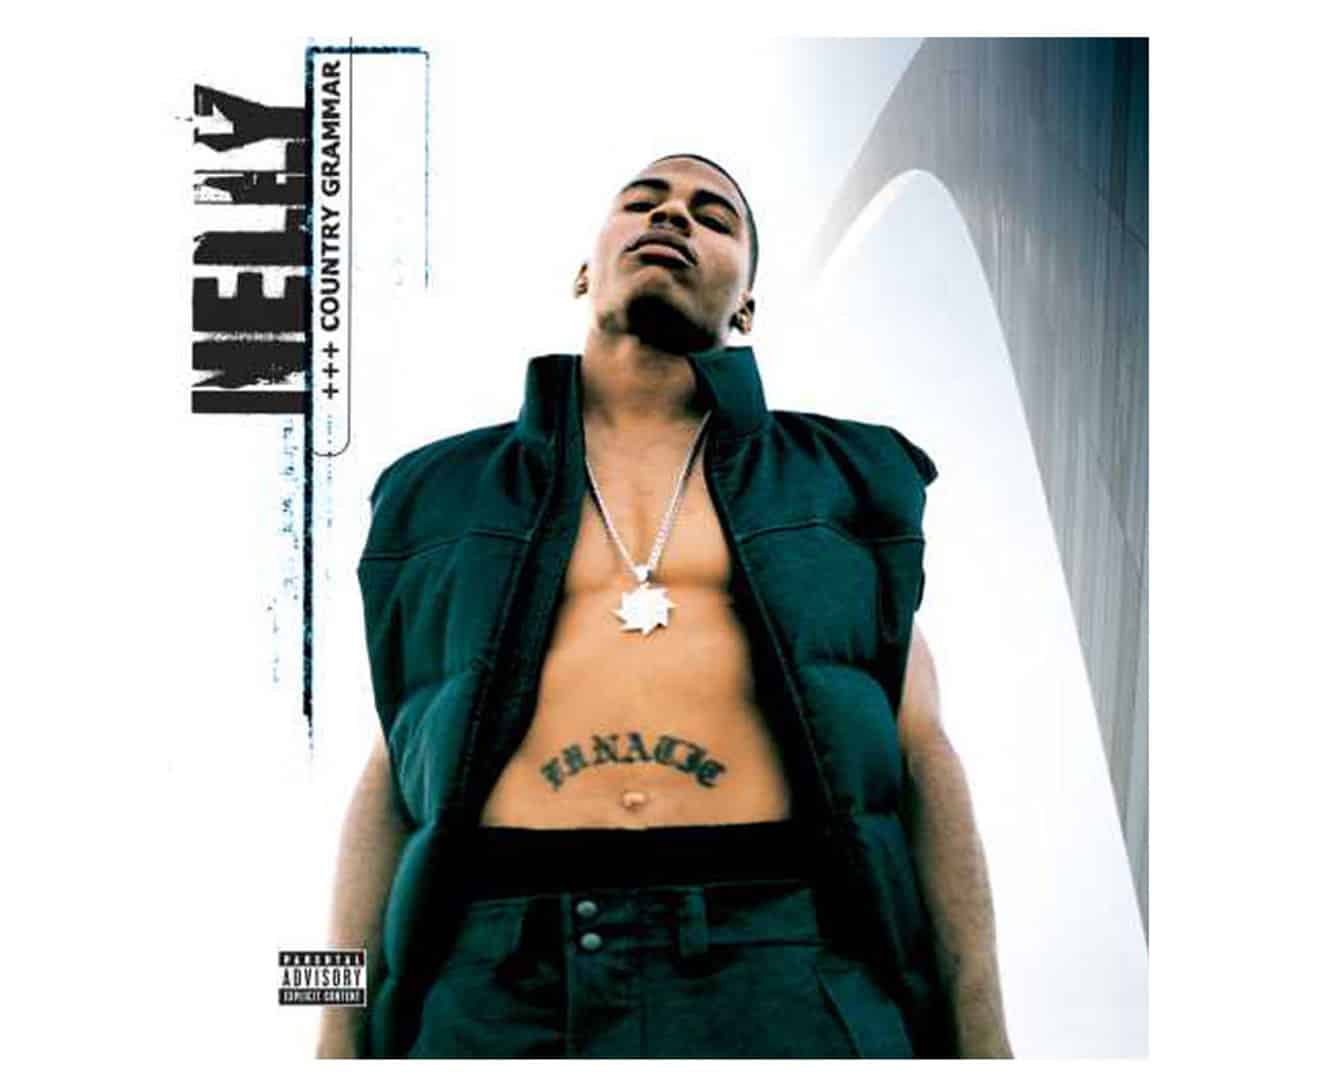 Nelly - Country Grammar Album Cover